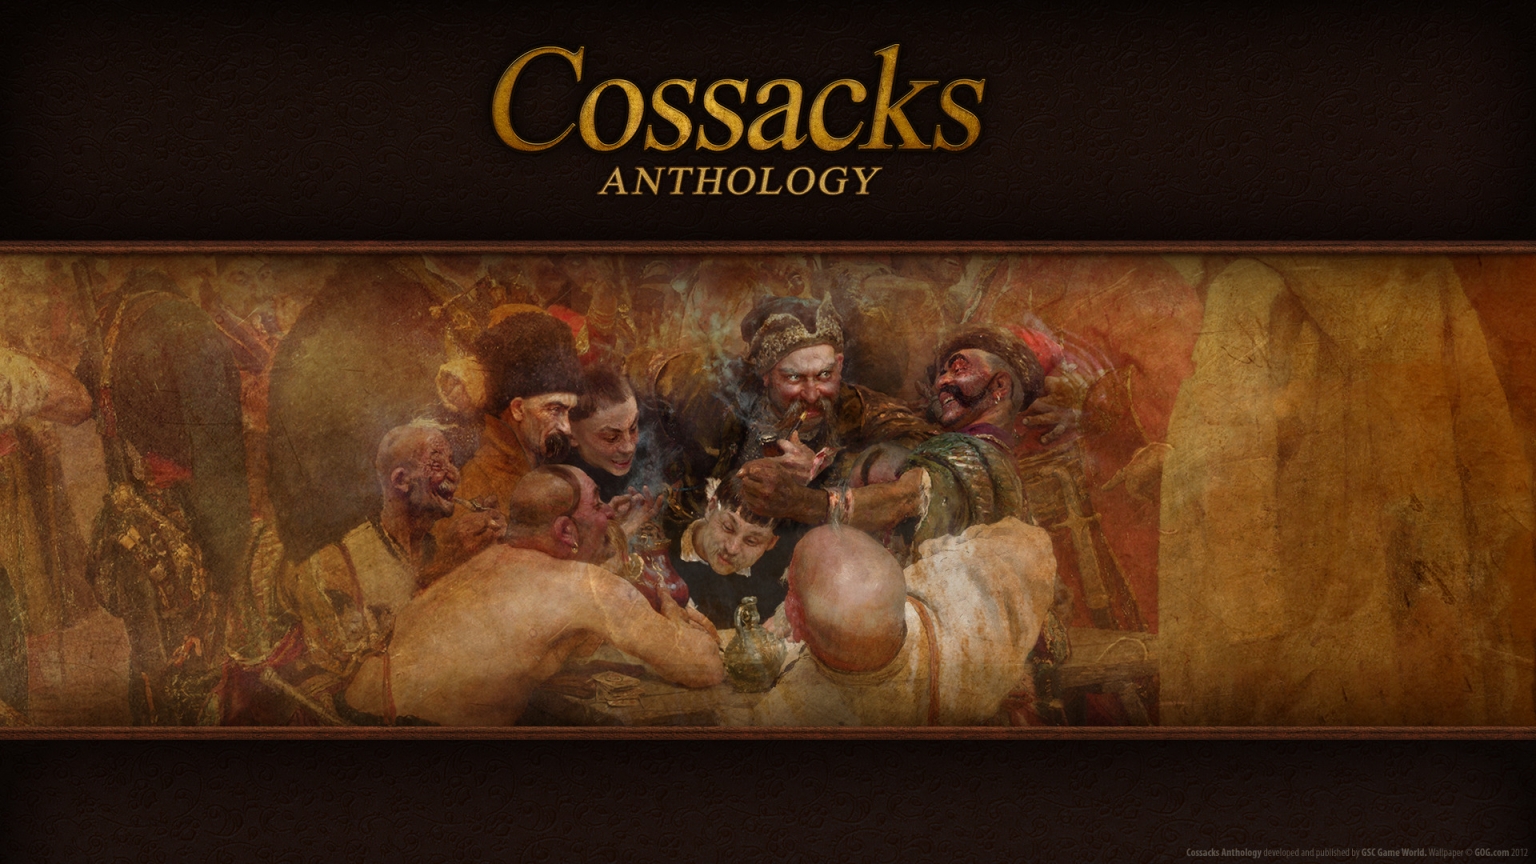 Cossacks Anthology for 1536 x 864 HDTV resolution